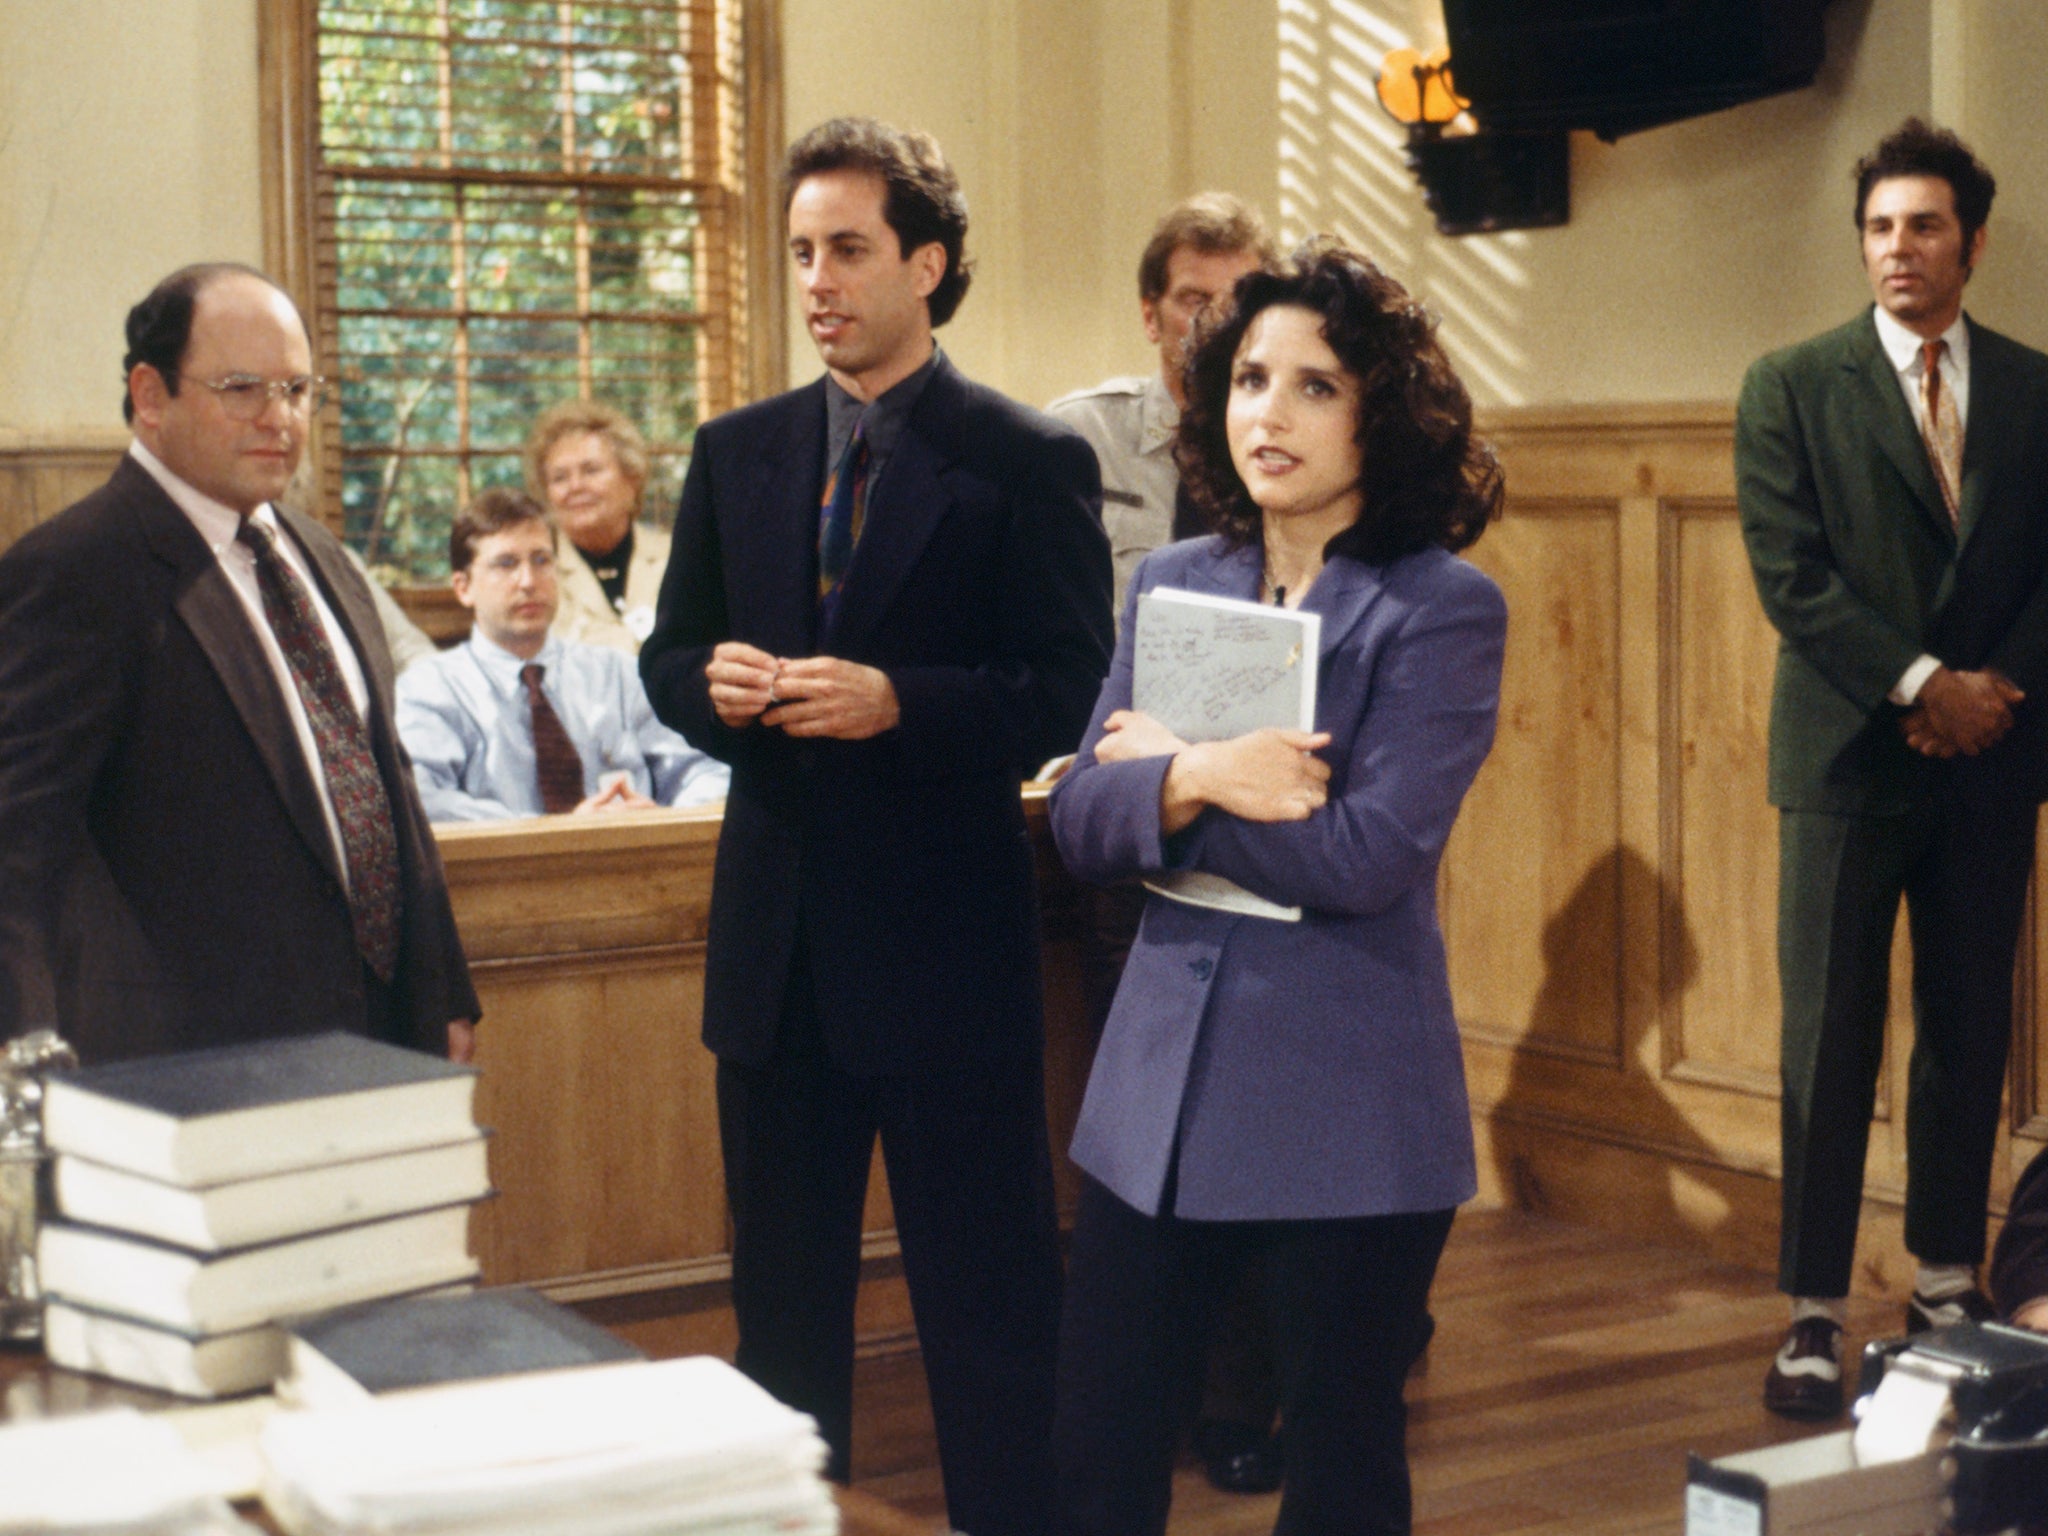 Jason Alexander as George Costanza, Jerry Seinfeld as himself, Julia Louis-Dreyfus as Elaine Benes and Michael Richards as Cosmo Kramer